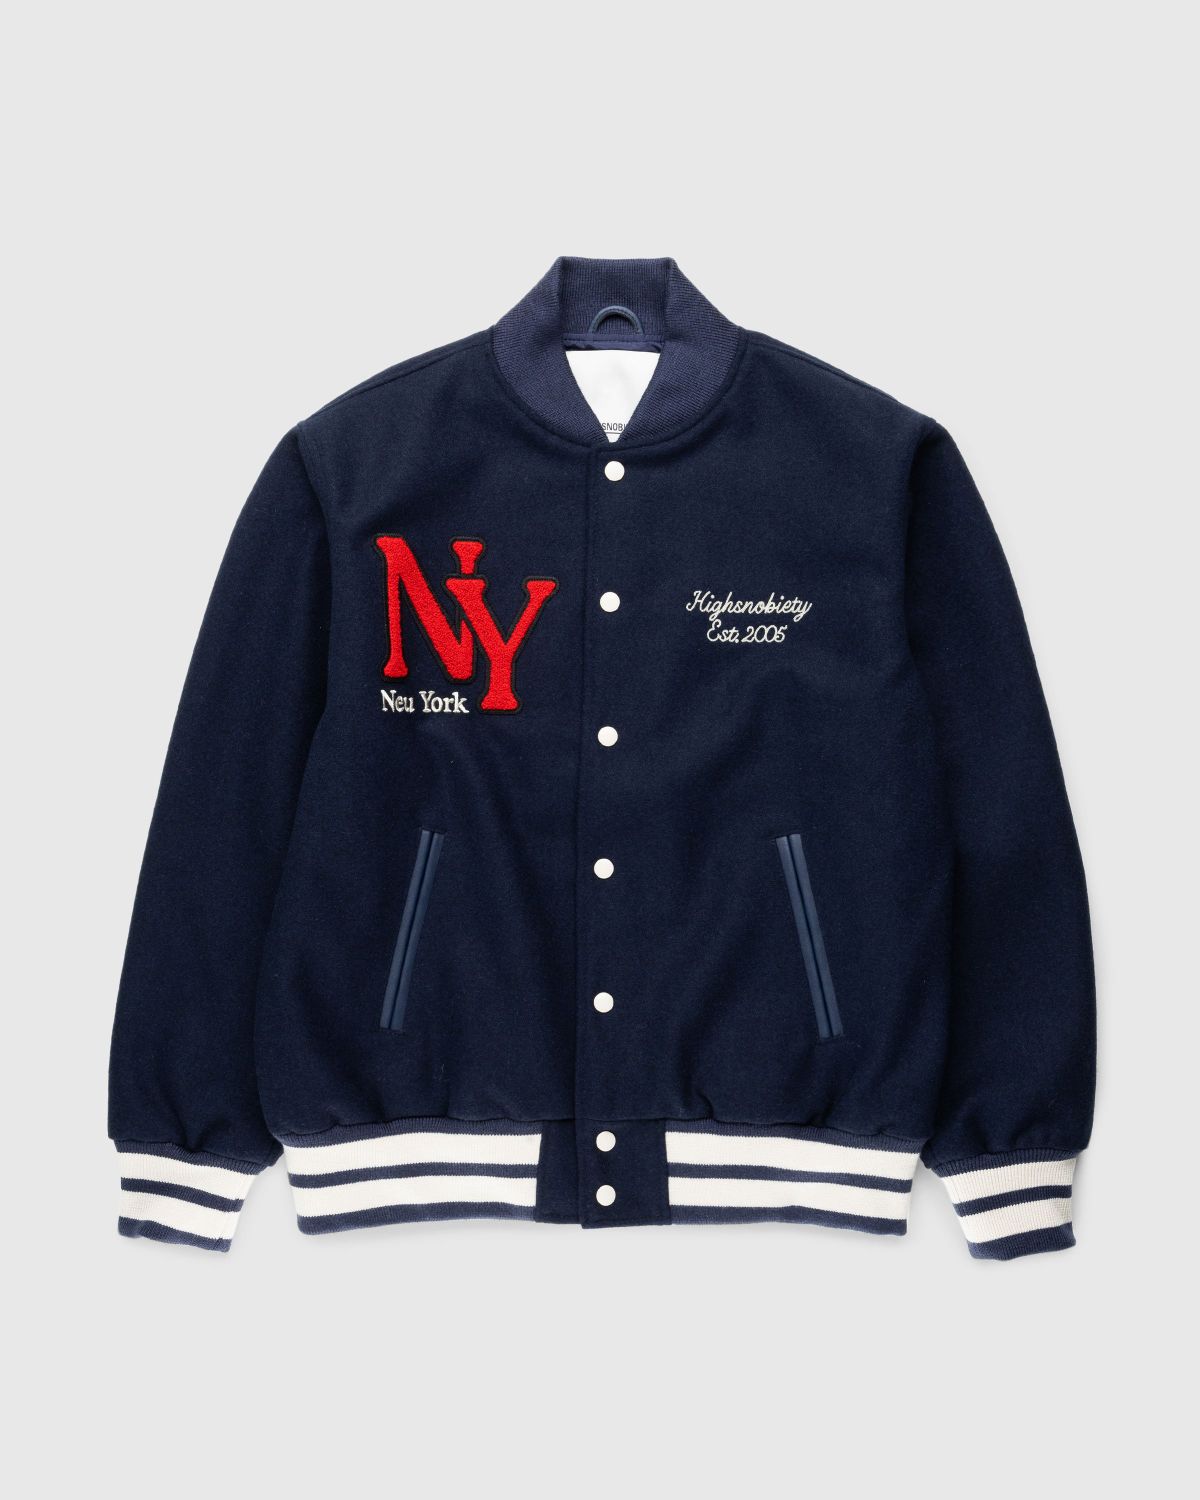 Highsnobiety – Neu York Varsity Jacket - Outerwear - Blue - Image 2